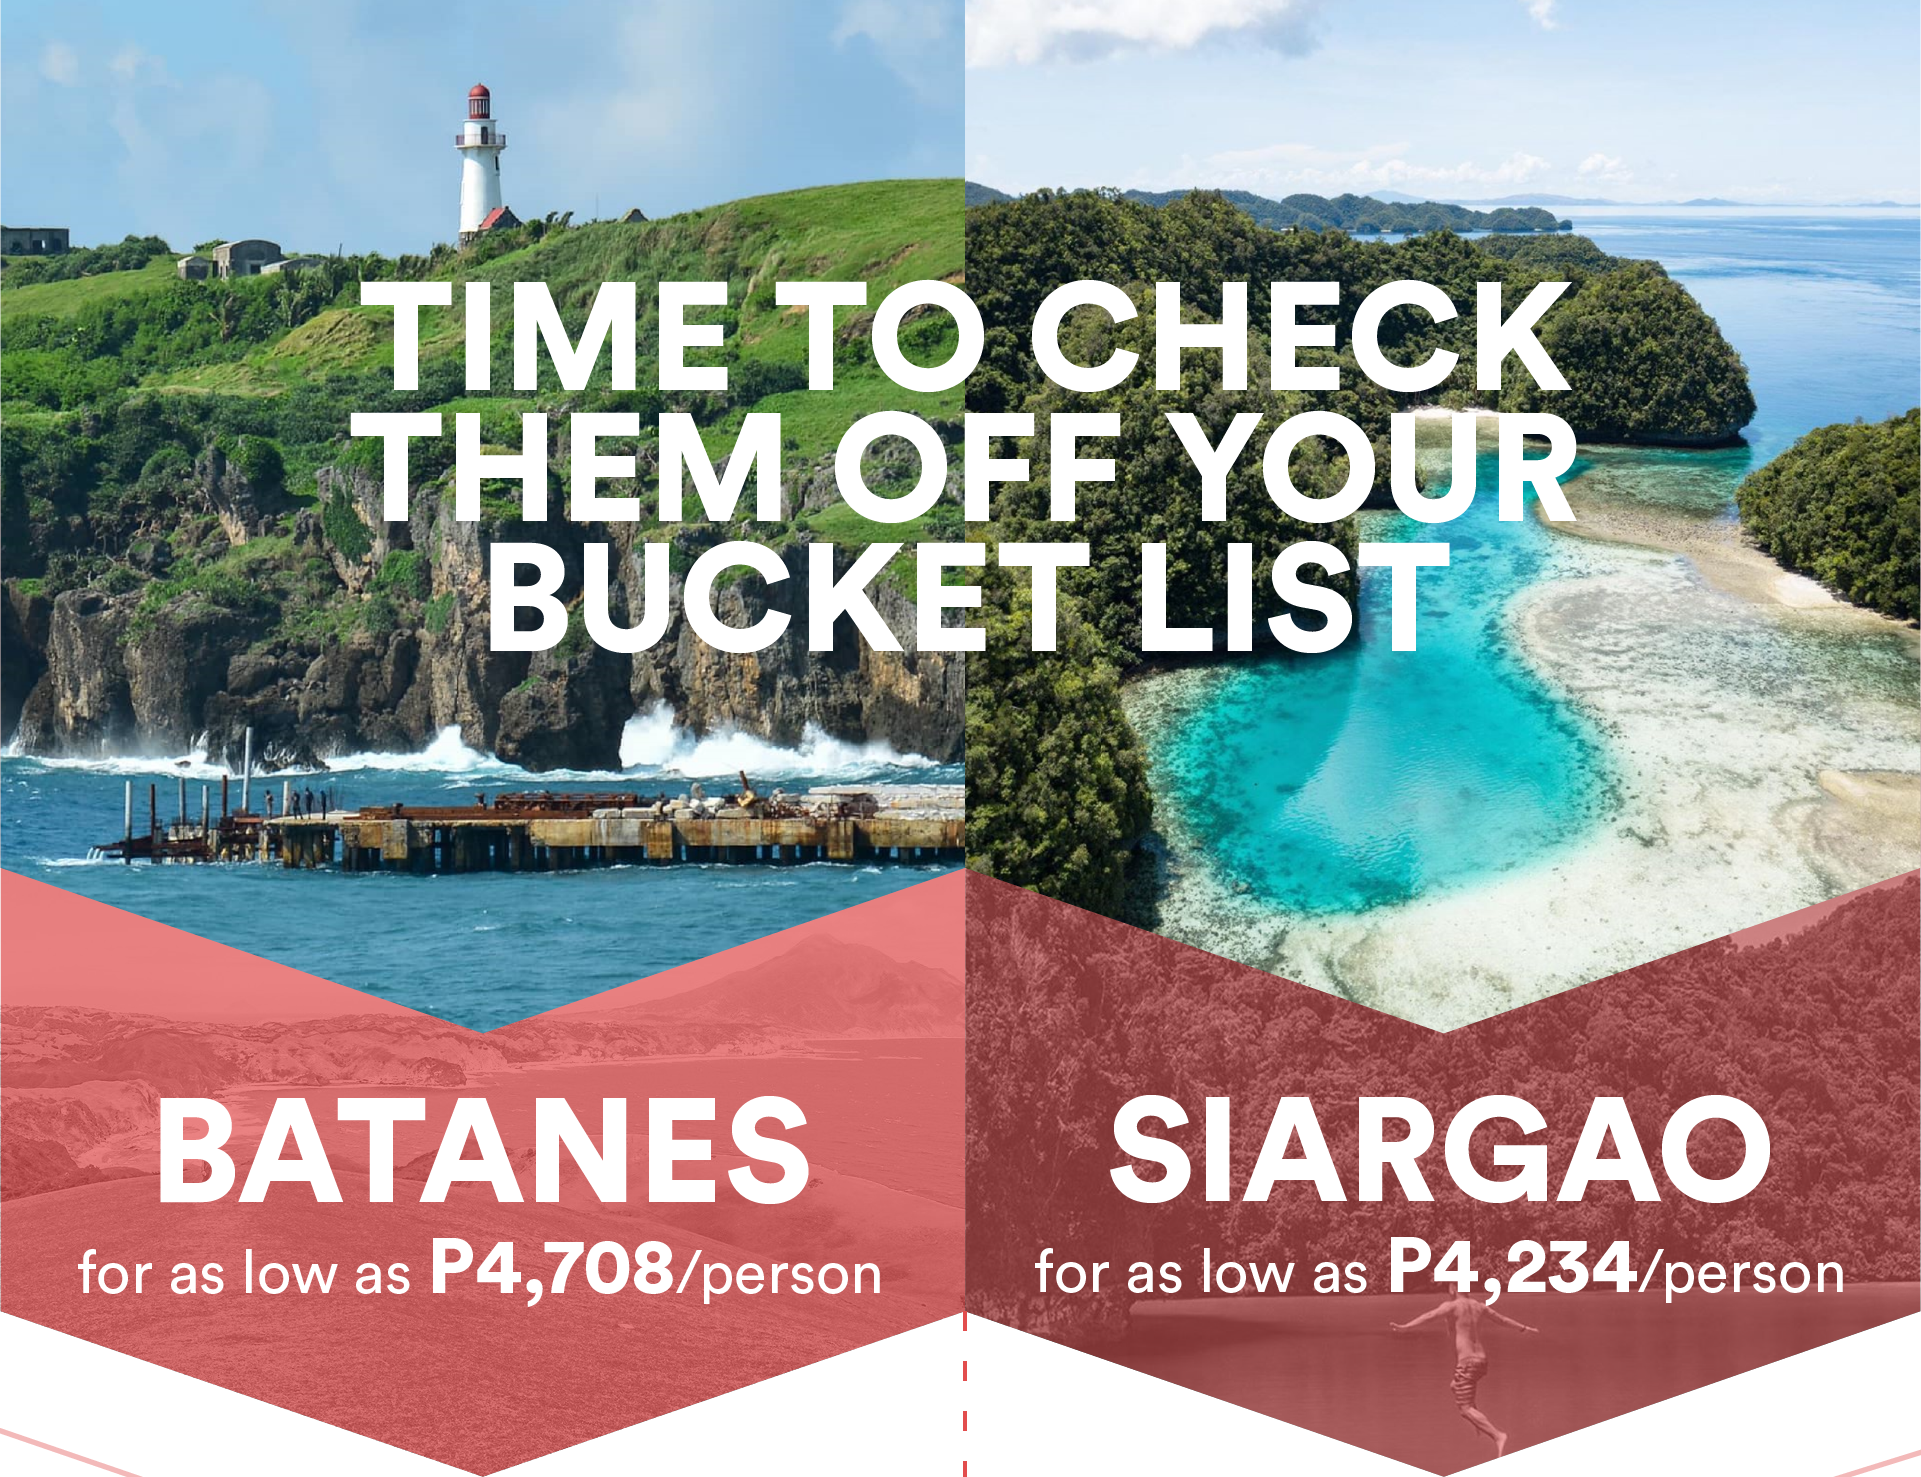 Batanes Island or Siargao Island